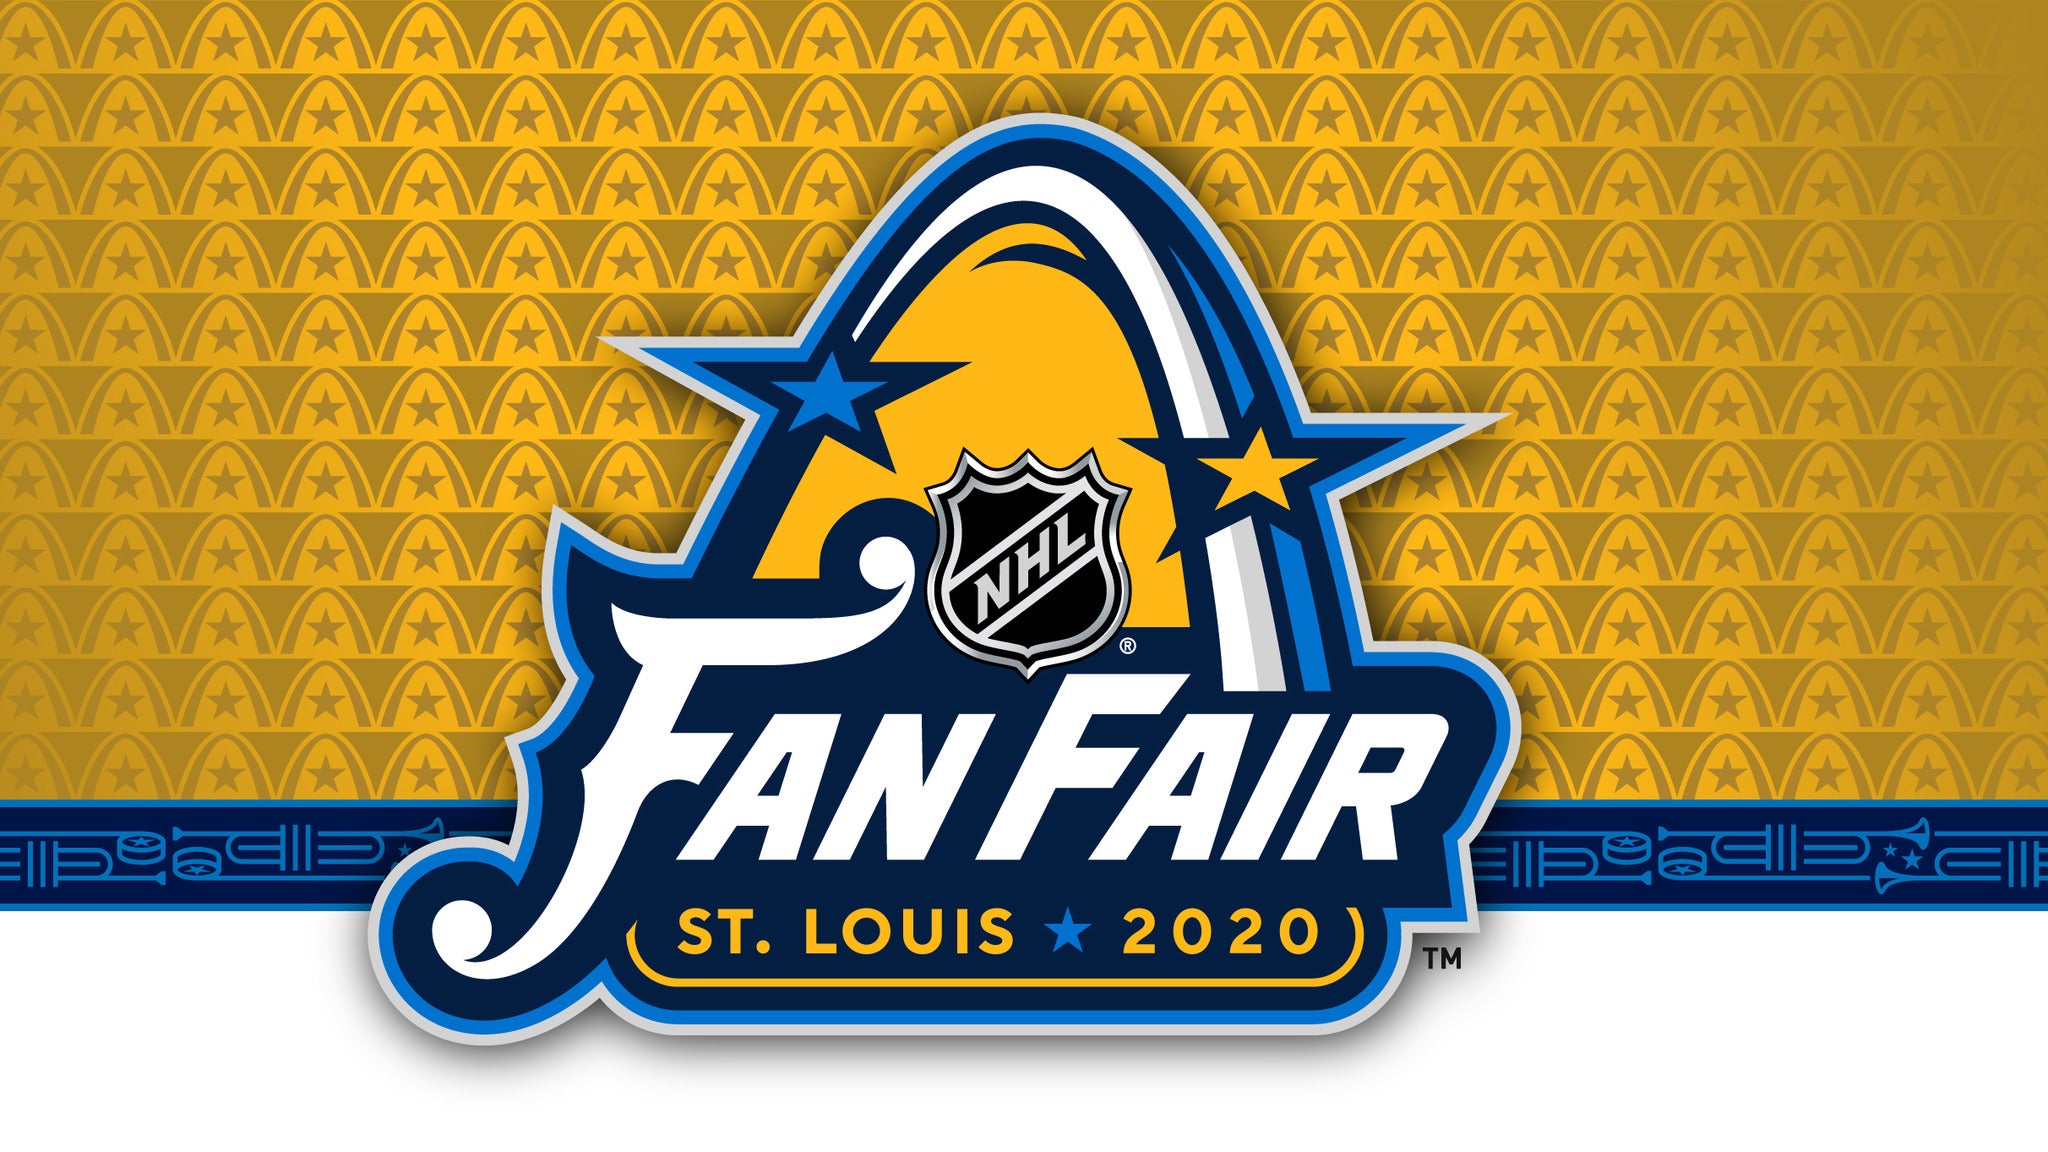 NHL Fan Fair Tickets | Single Game Tickets & Schedule | 0